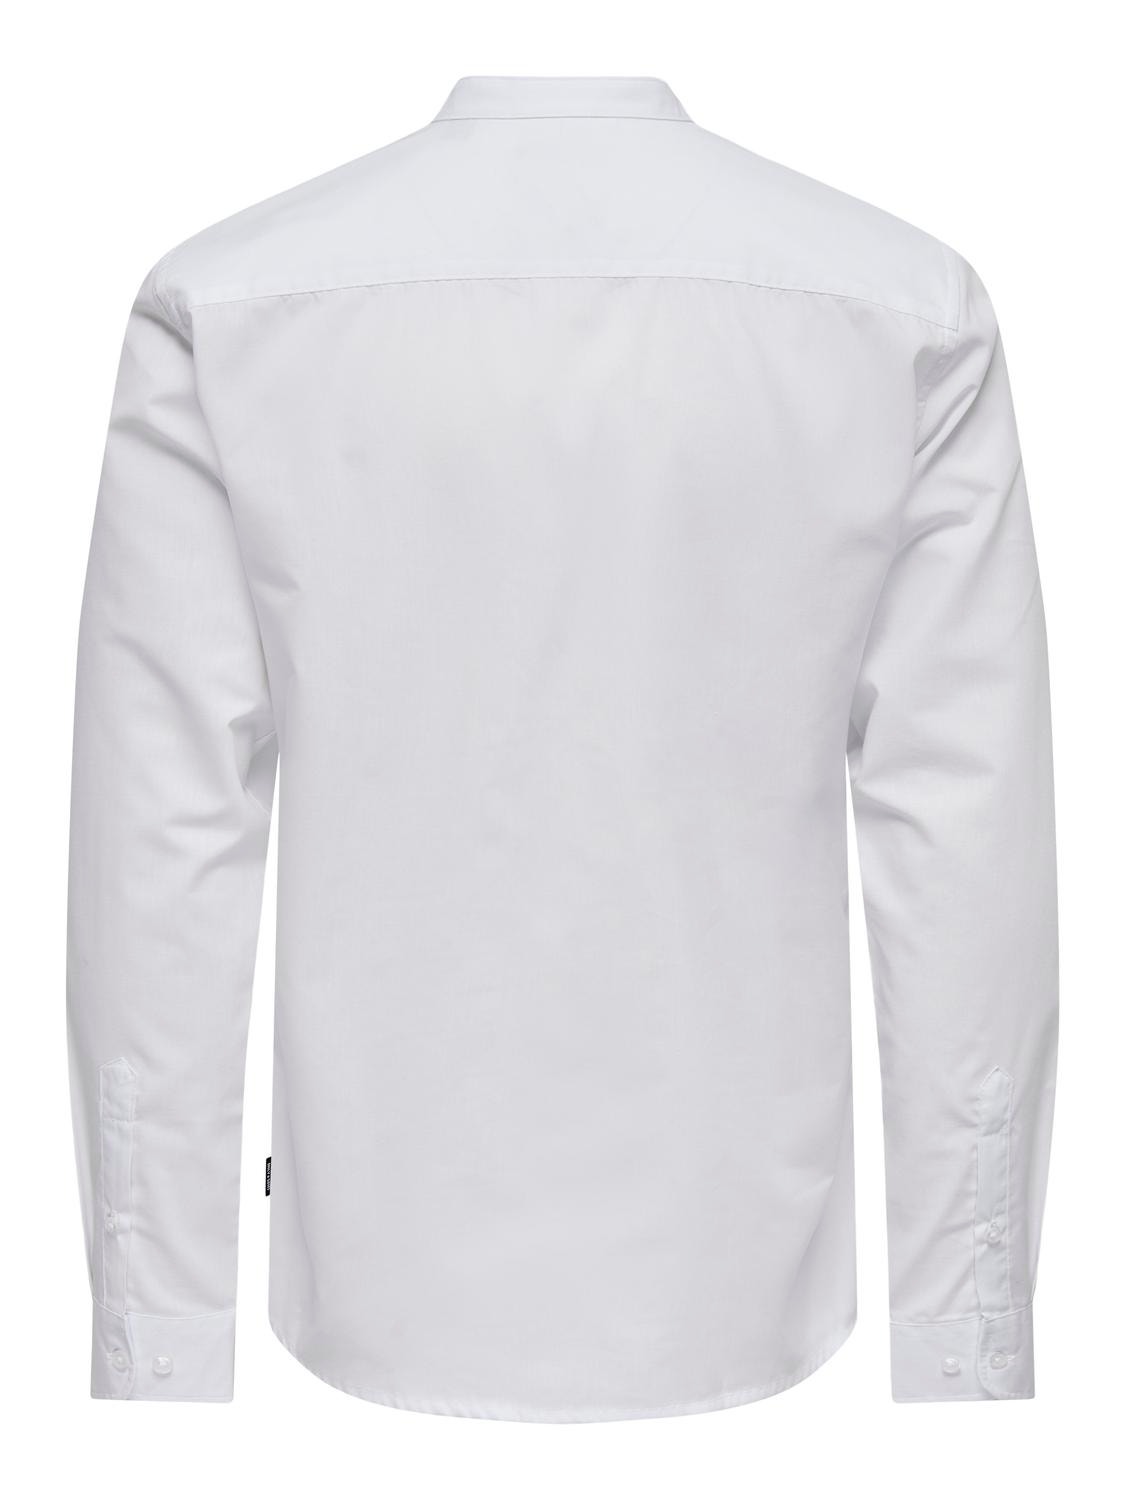 ONLY & SONS Camisas Corte slim Cuello Mao -White - 22024167